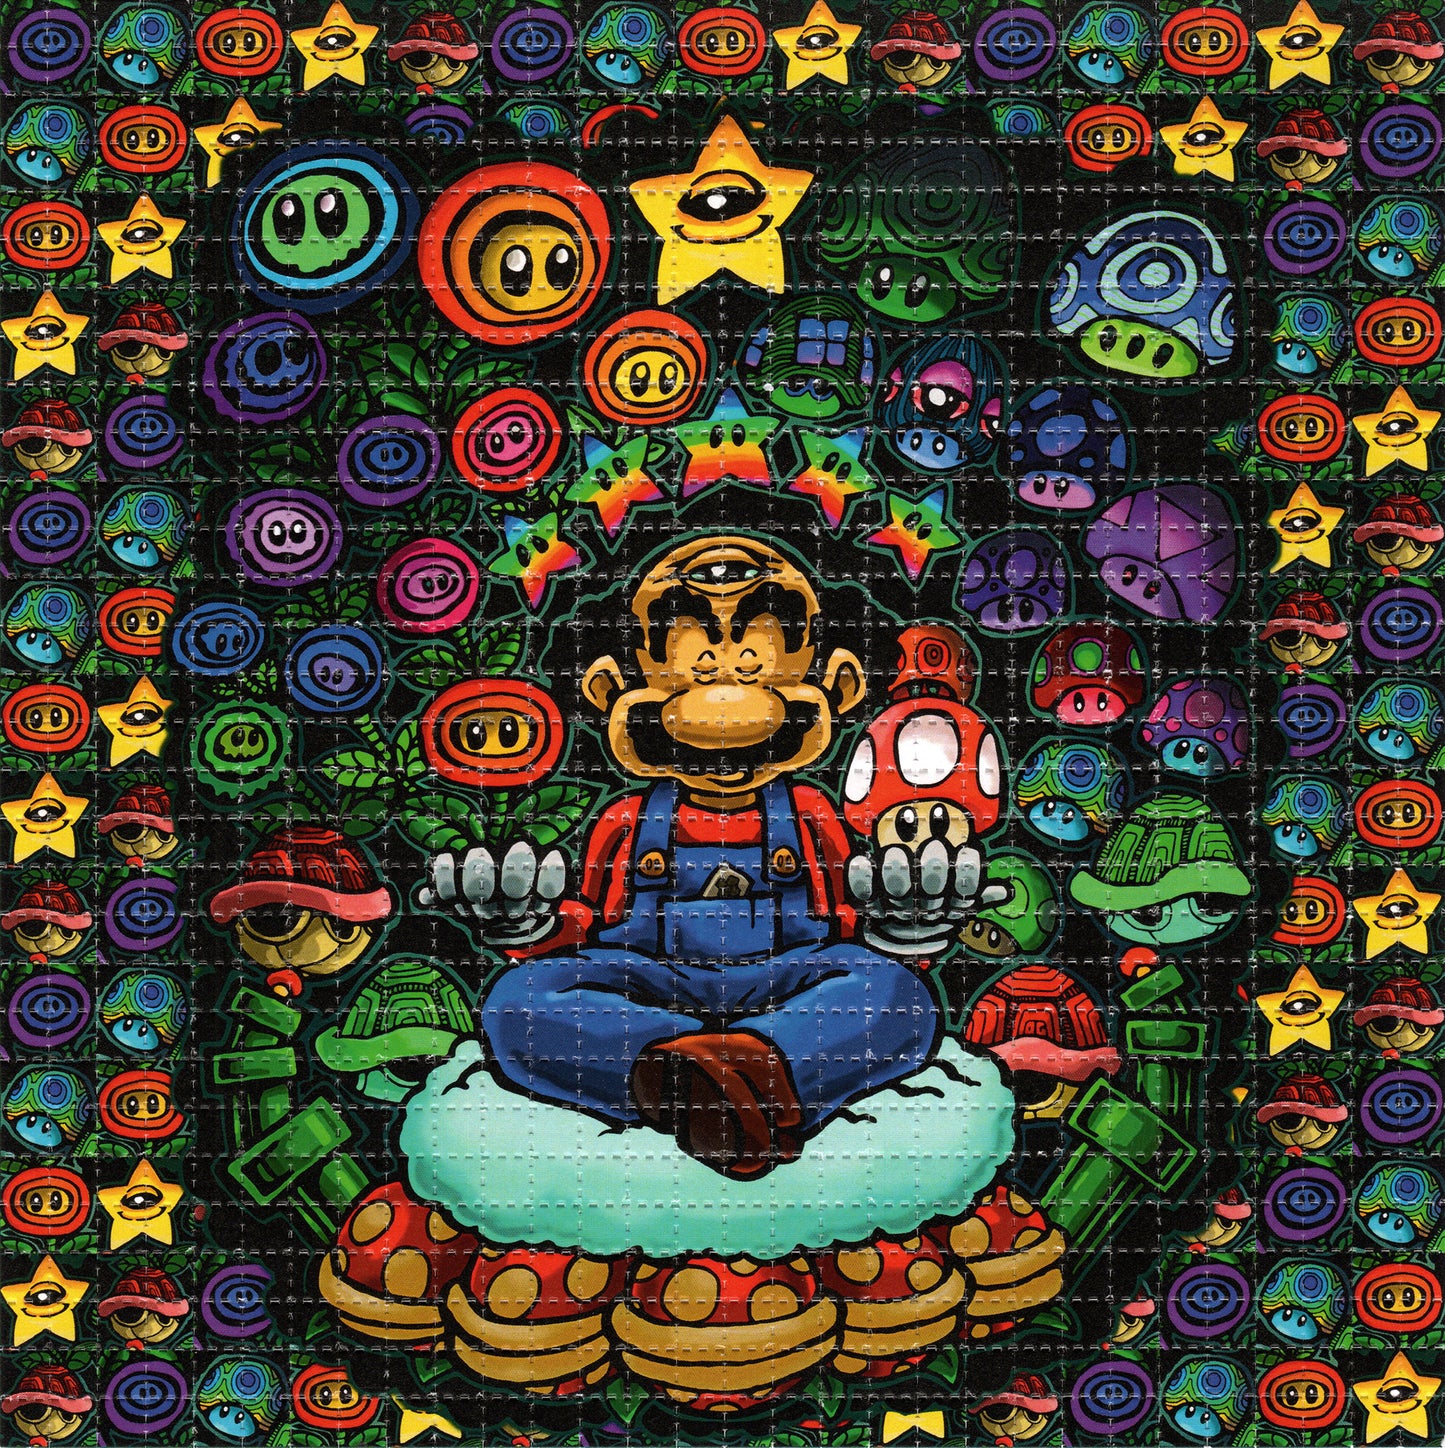 Zen Mario Mushrooms by Steve Wilson SIGNED Limited Edition LSD blotter art print